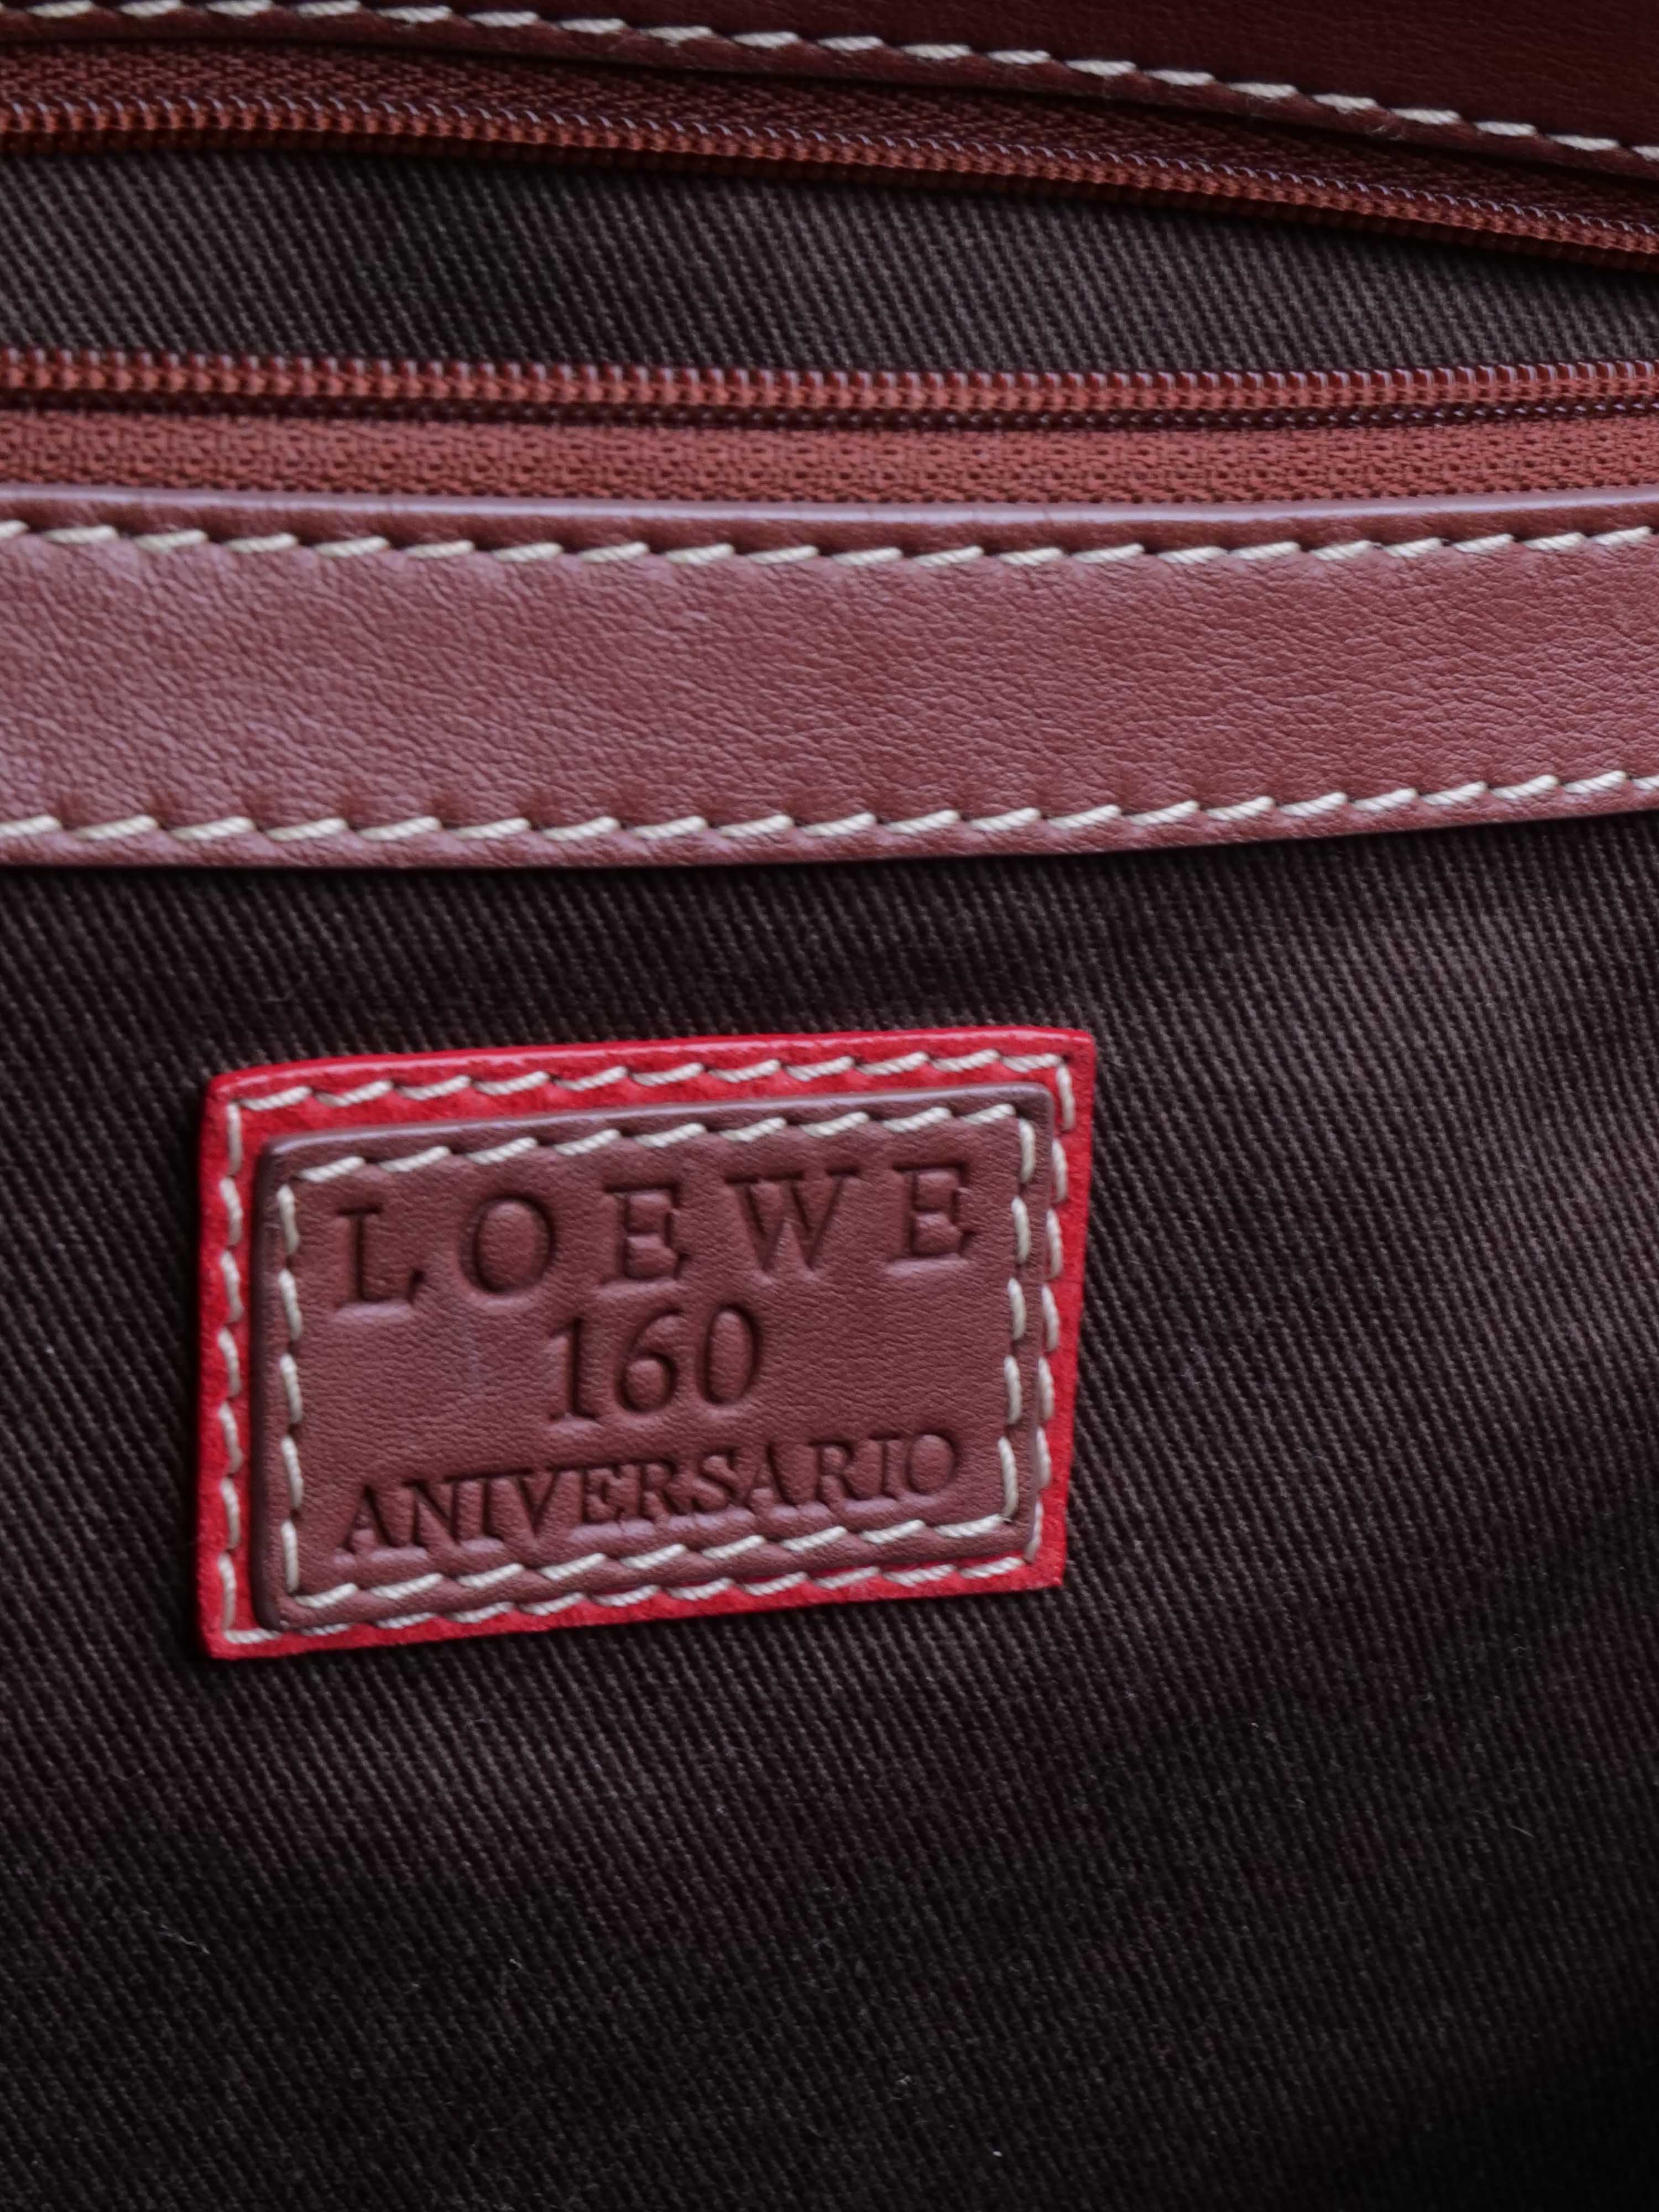 Loewe 160th Anniversary Logo Frame Top Handle Bag.